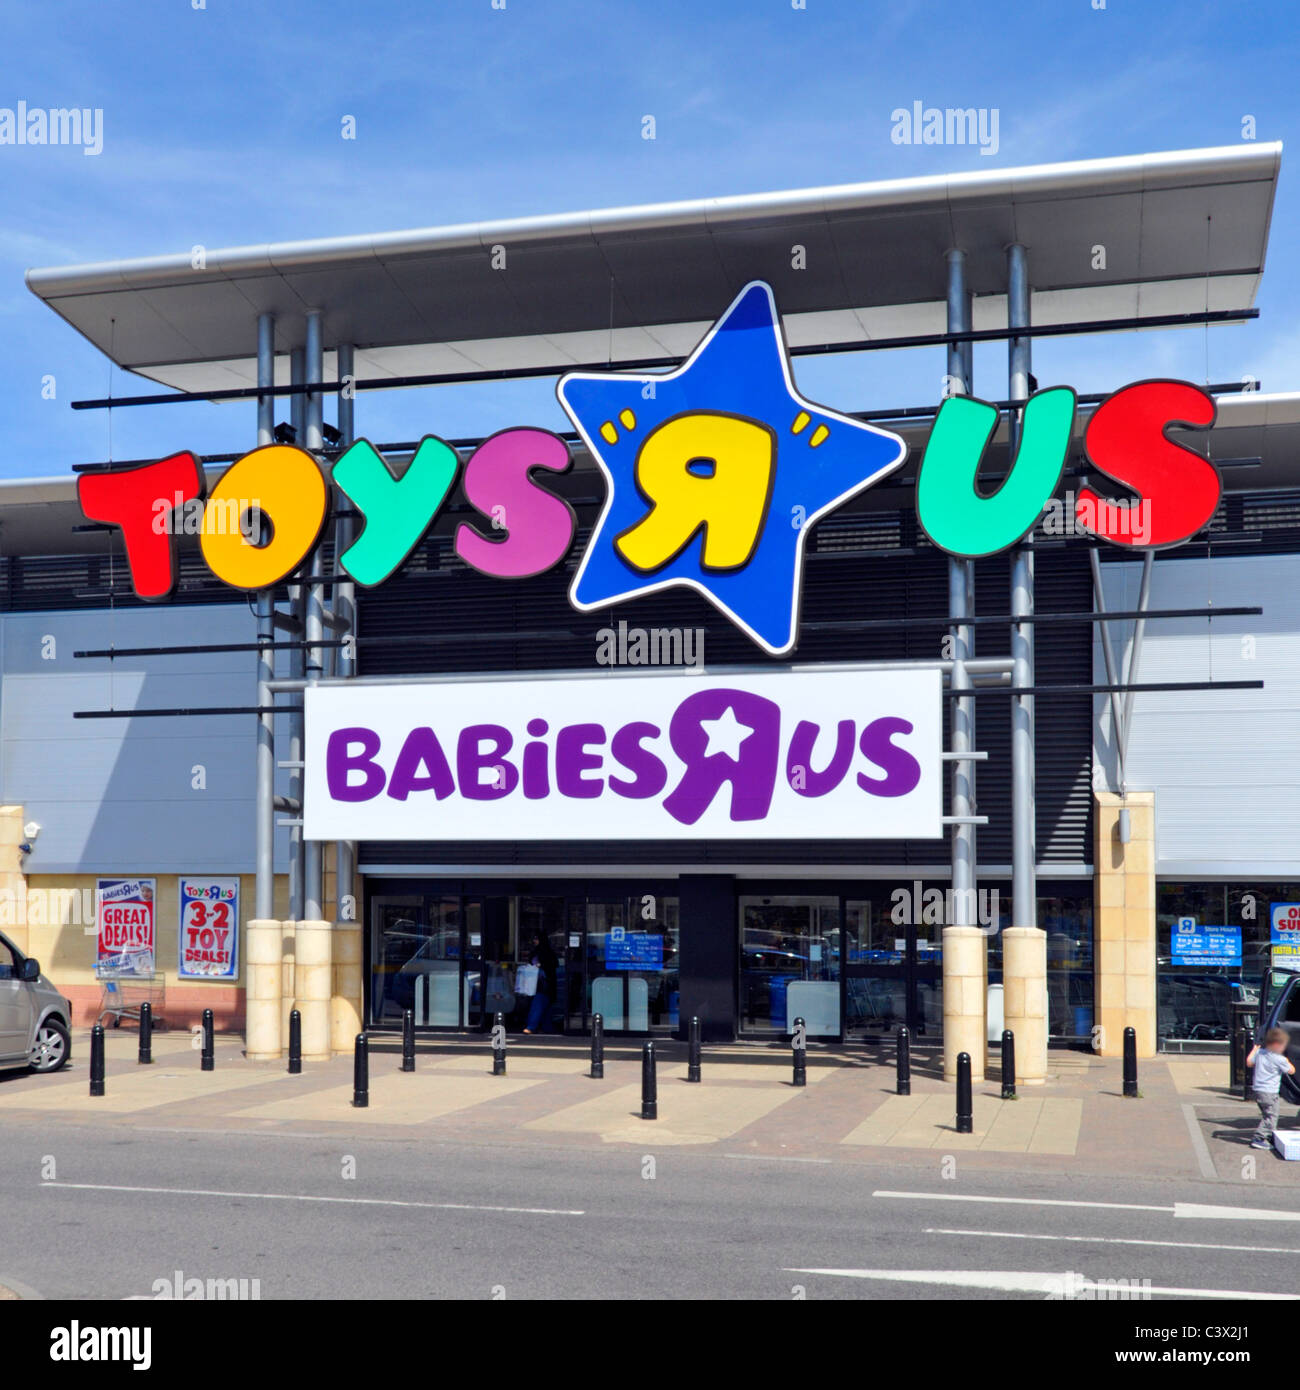 Ingresso a Toys Are Us e baby store, insegne e loghi del marchio Babies R Us nel grande parco commerciale West Thurrock Essex Inghilterra Regno Unito Foto Stock